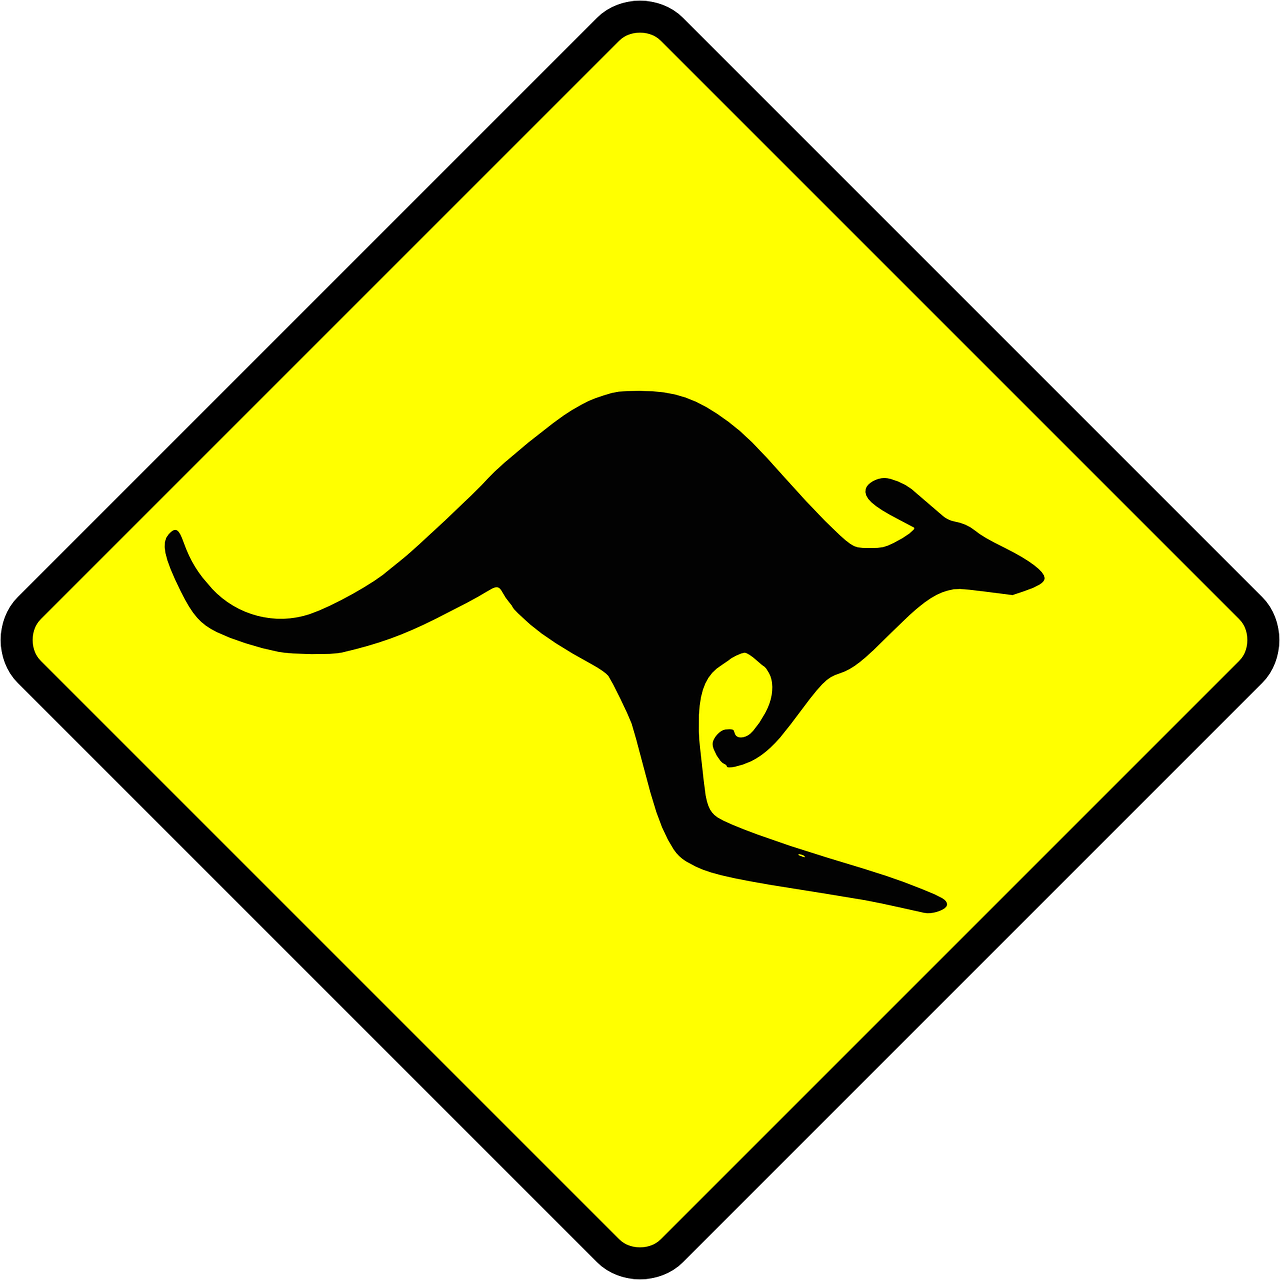 sign symbols kangaroo free photo